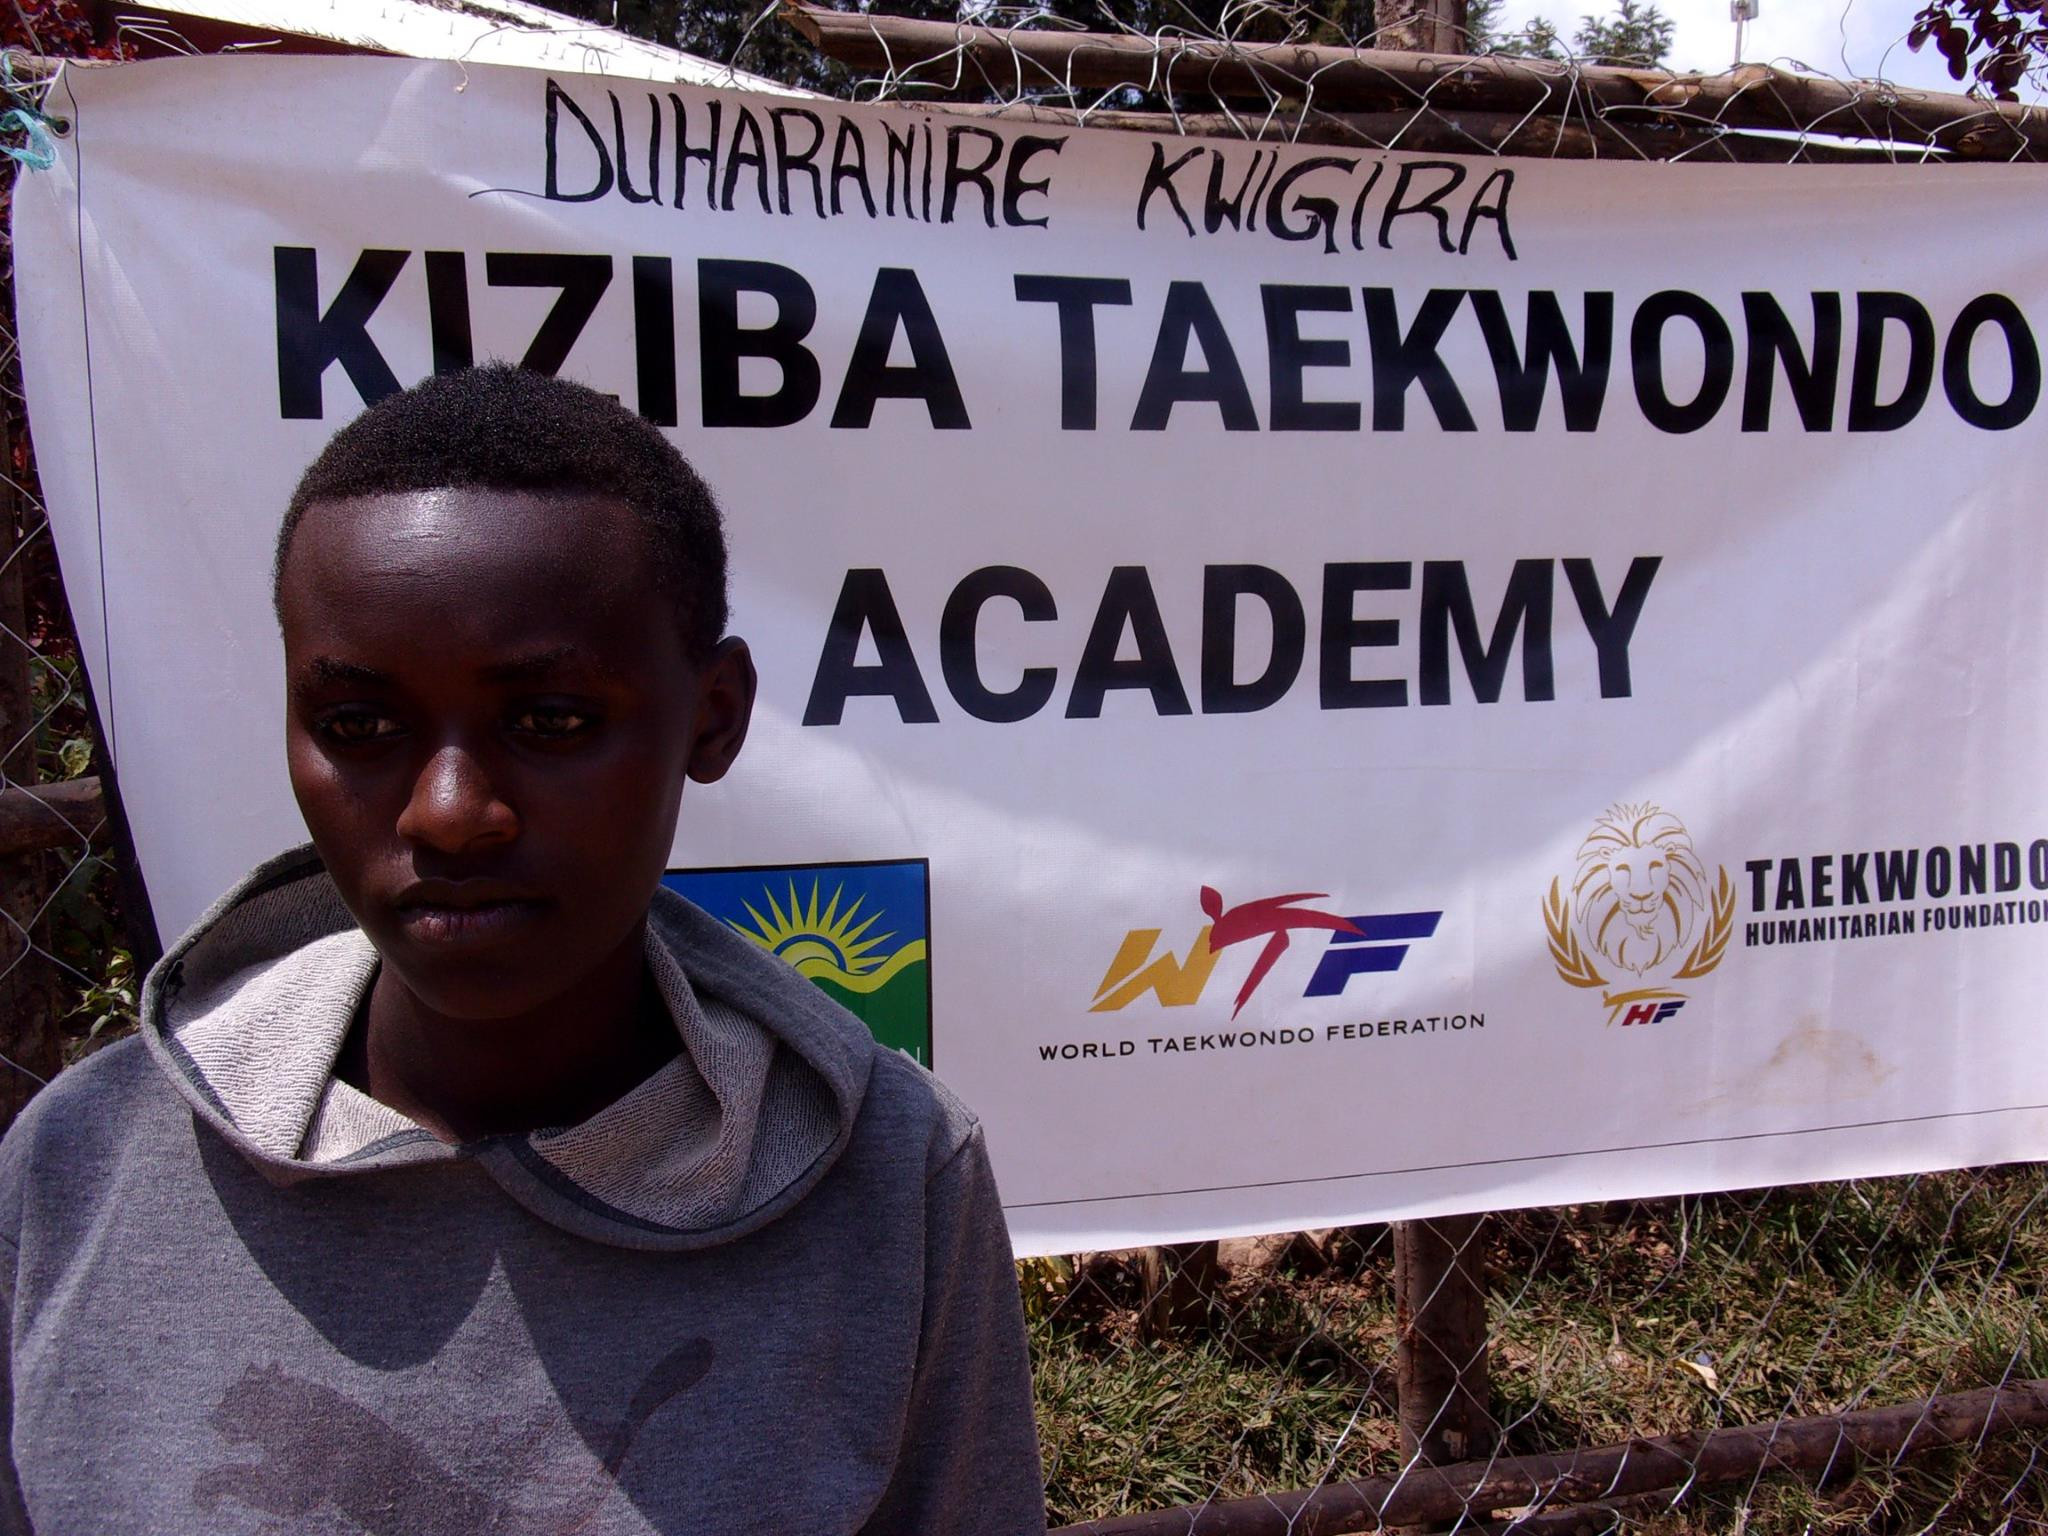 Teenager in Rwanda praises work of Taekwondo Humanitarian Foundation